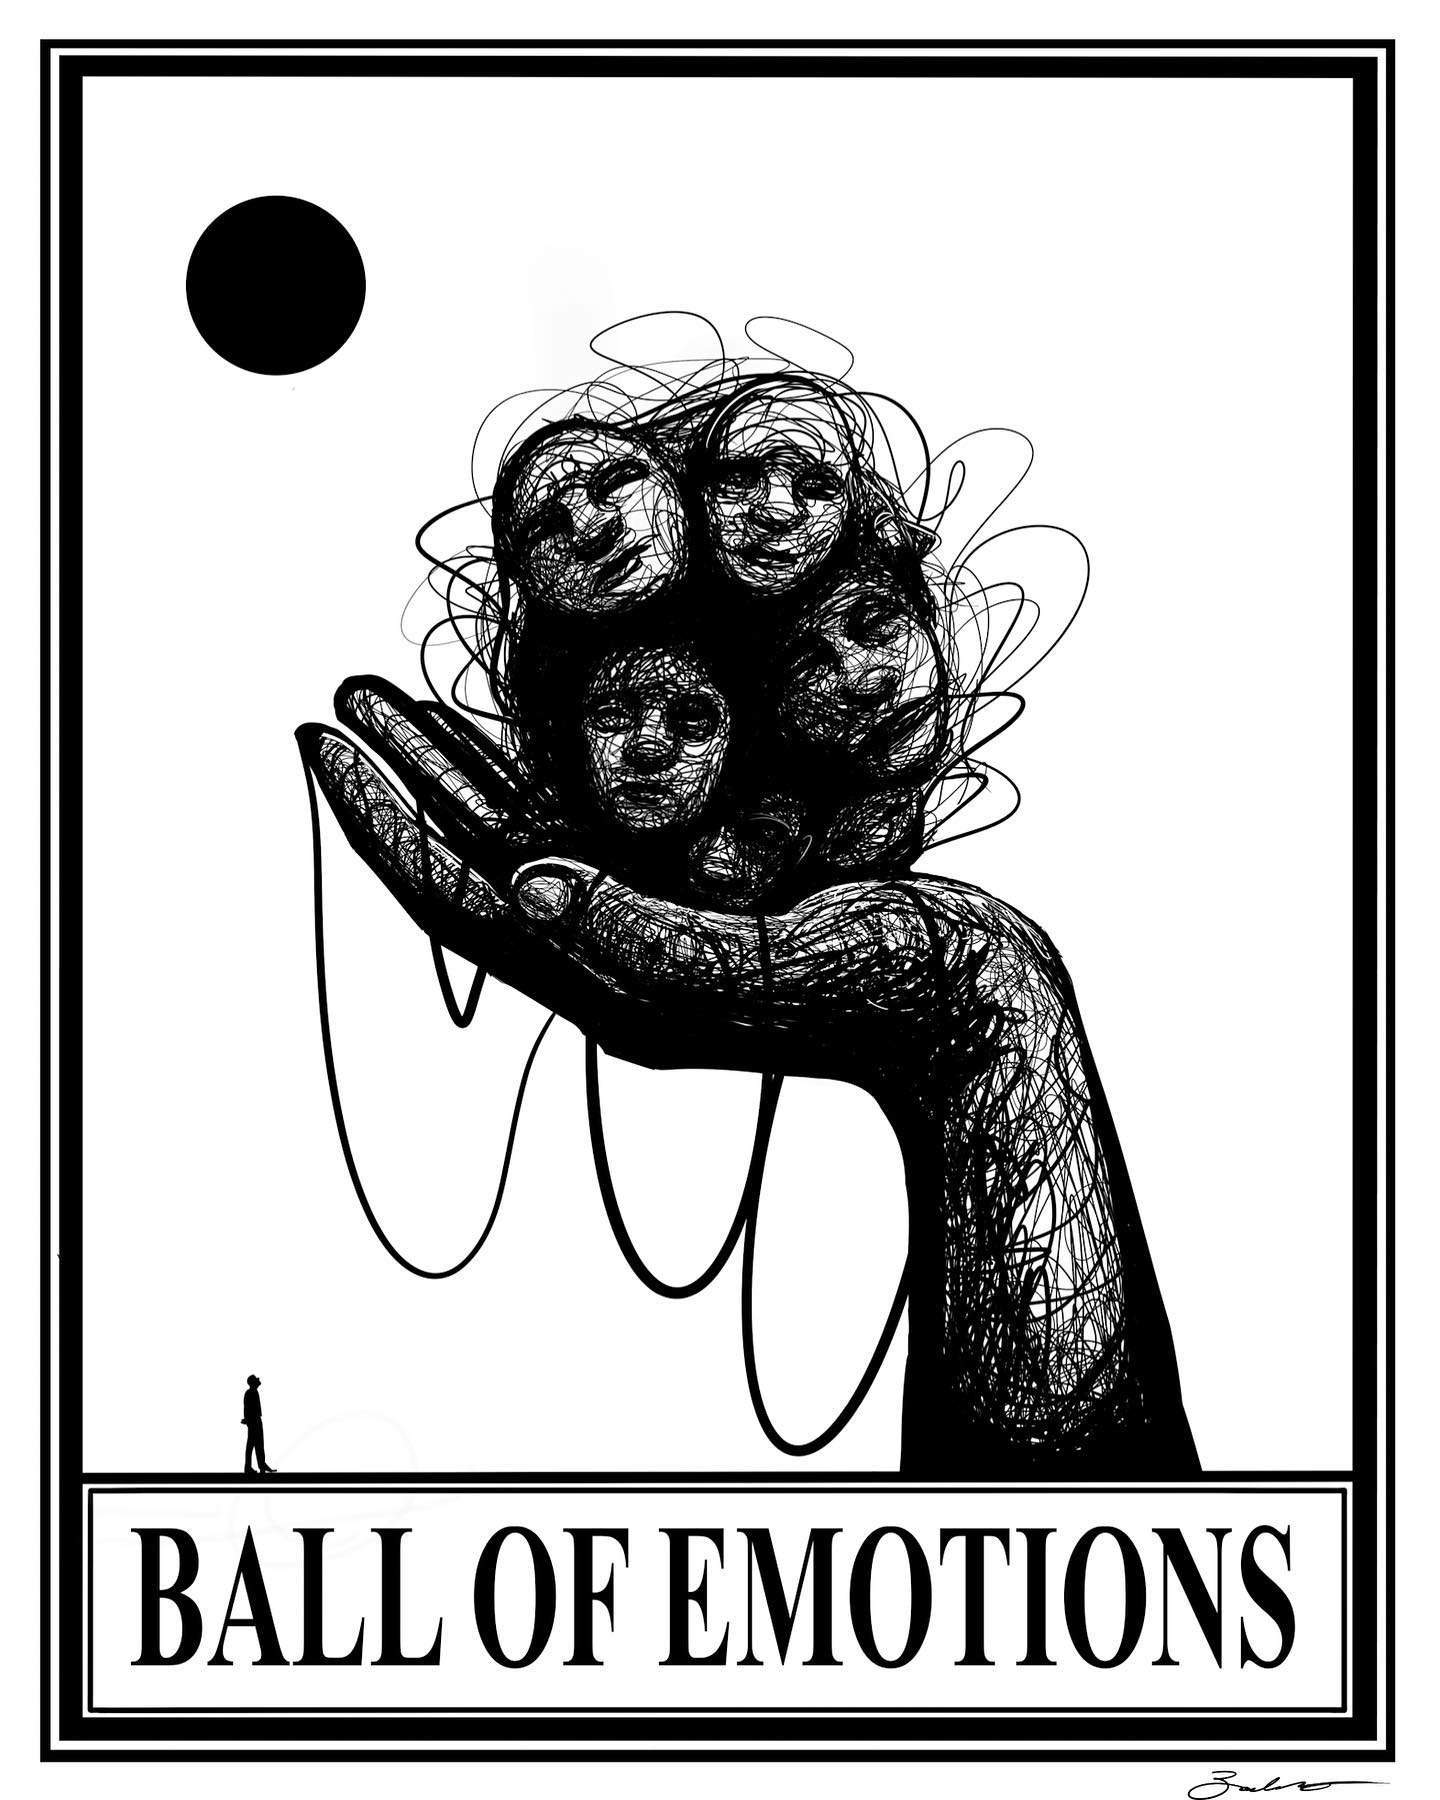 “Ball of Emotions” 

#emotions #psychology #psychiatry #mentalhealth #mooddisorders #artwork #scribble #emotion #ball #h